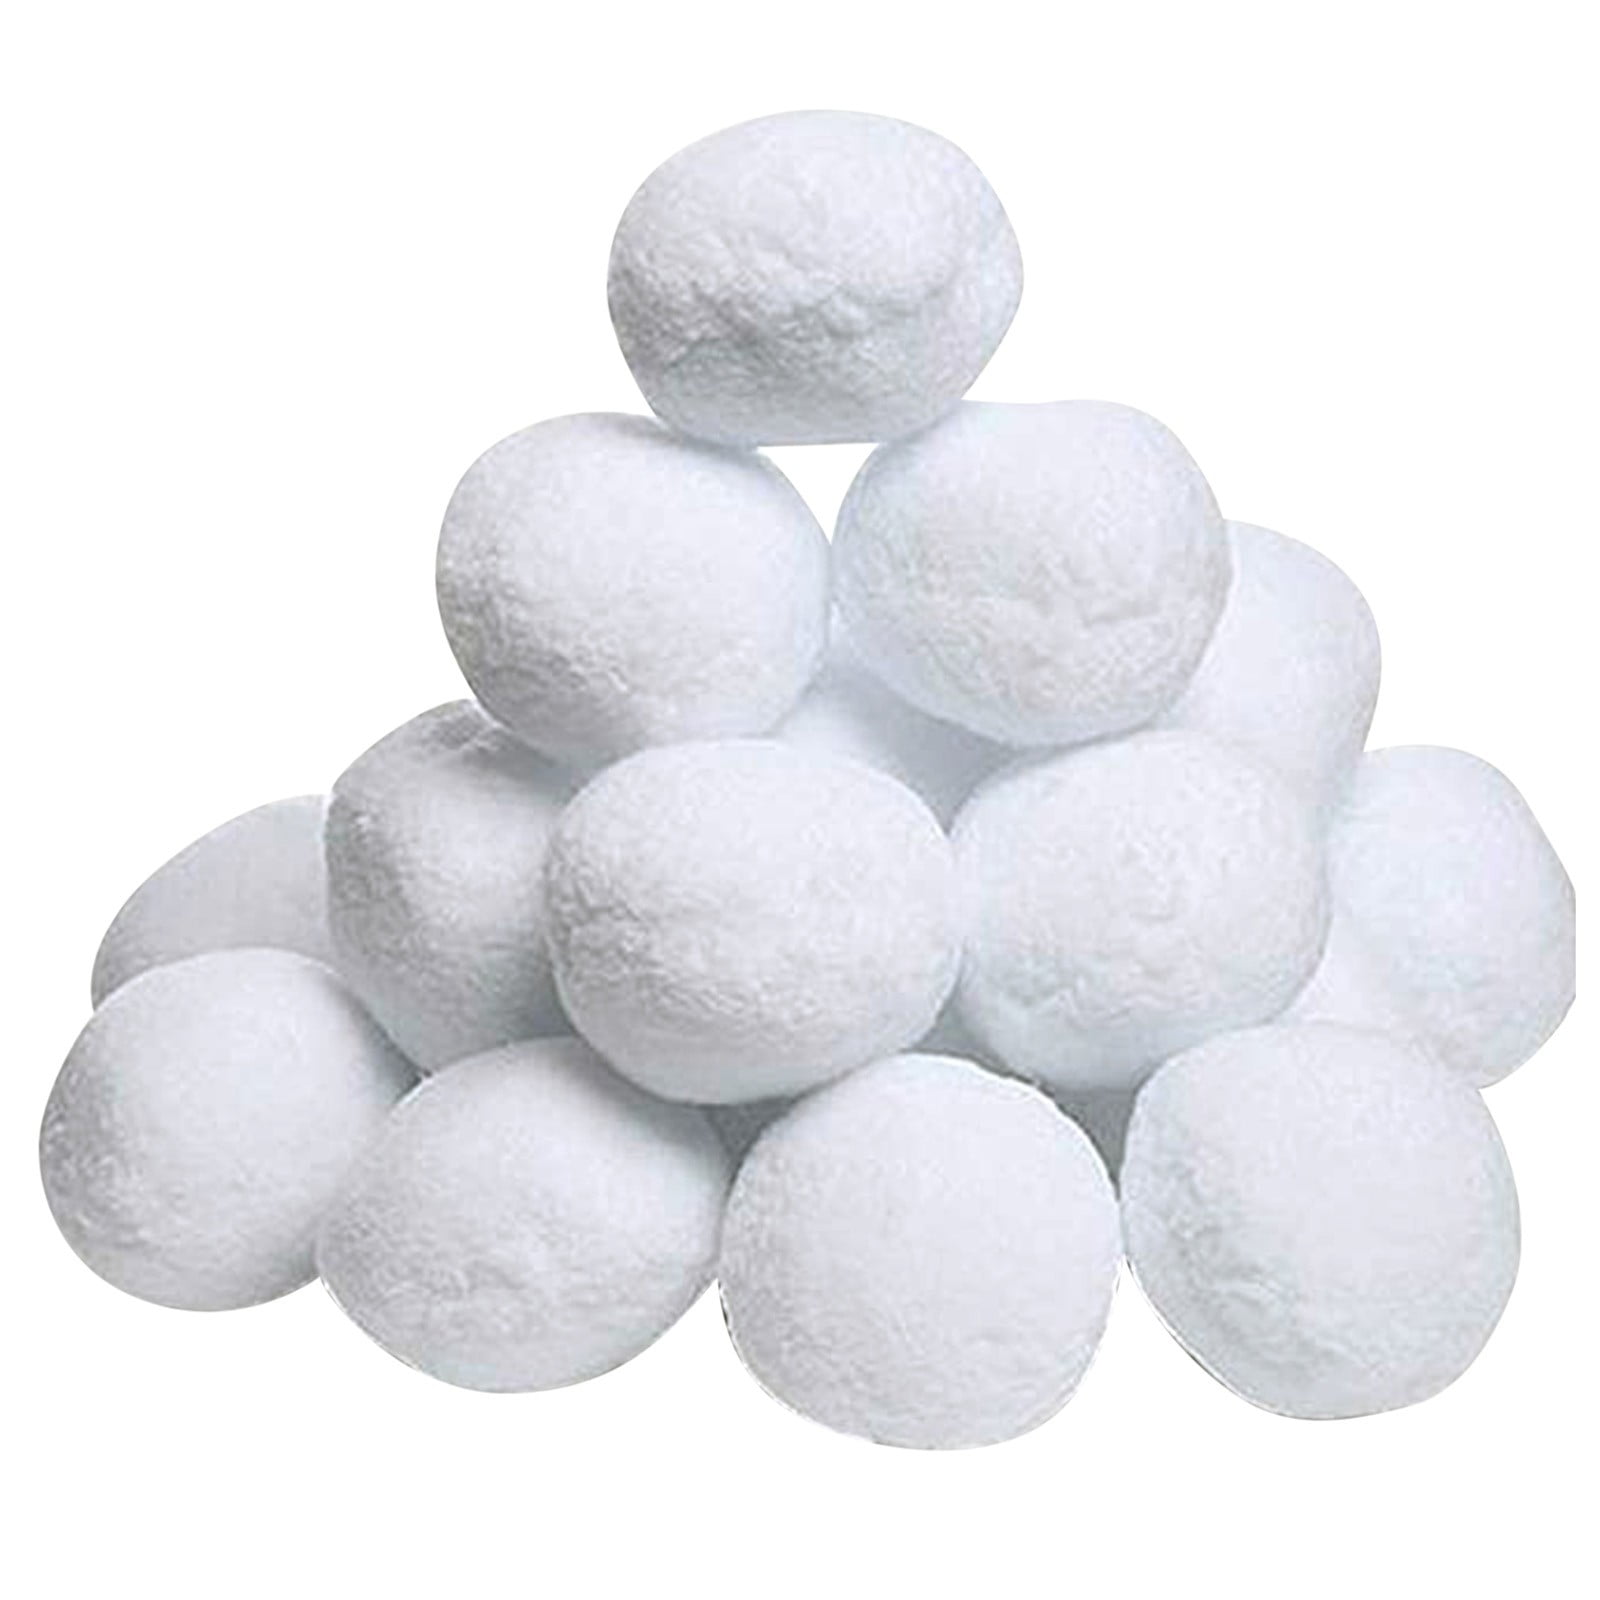 Lots Winter Fake Soft Plush Snowballs Indoor Toys Xmas Tree Decor Supplies 7cm 